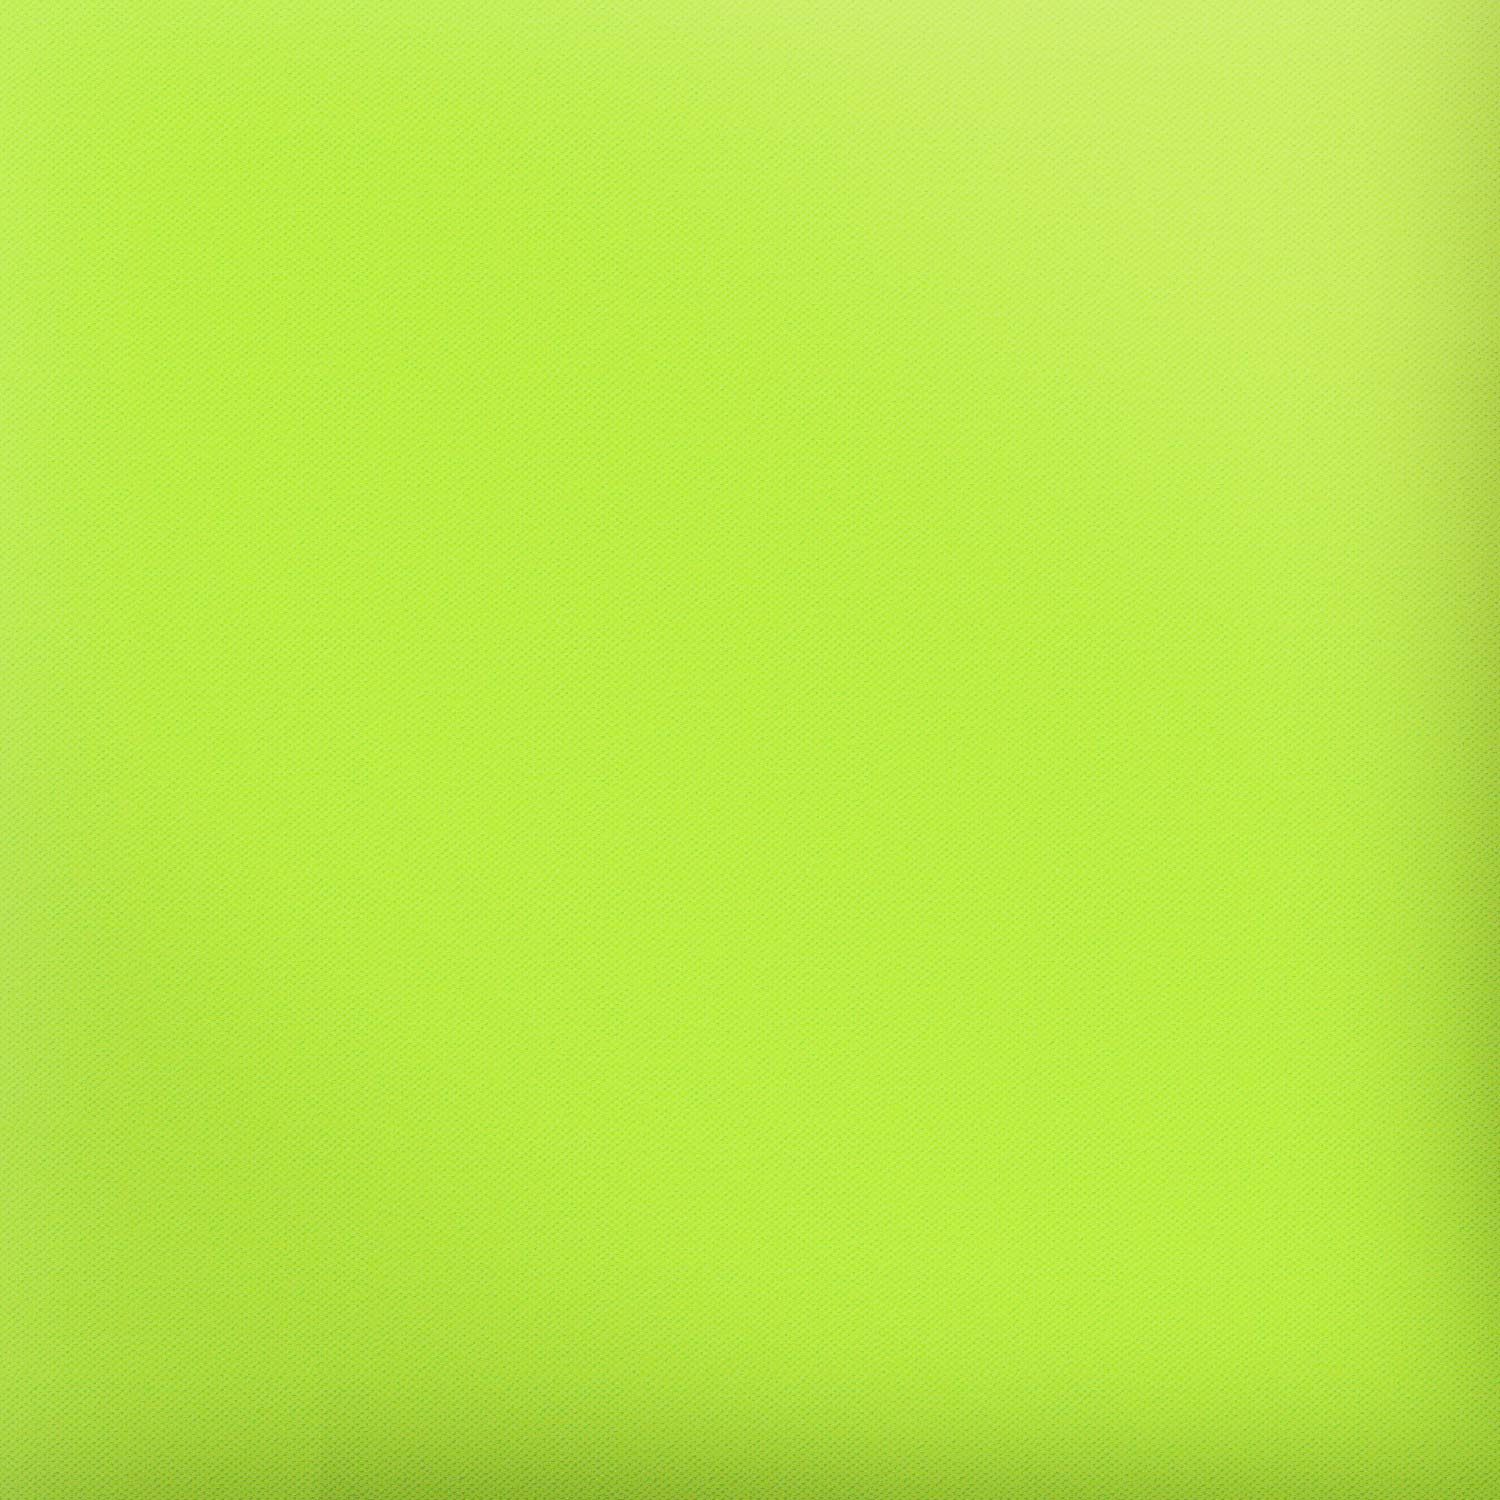 plain lime green background